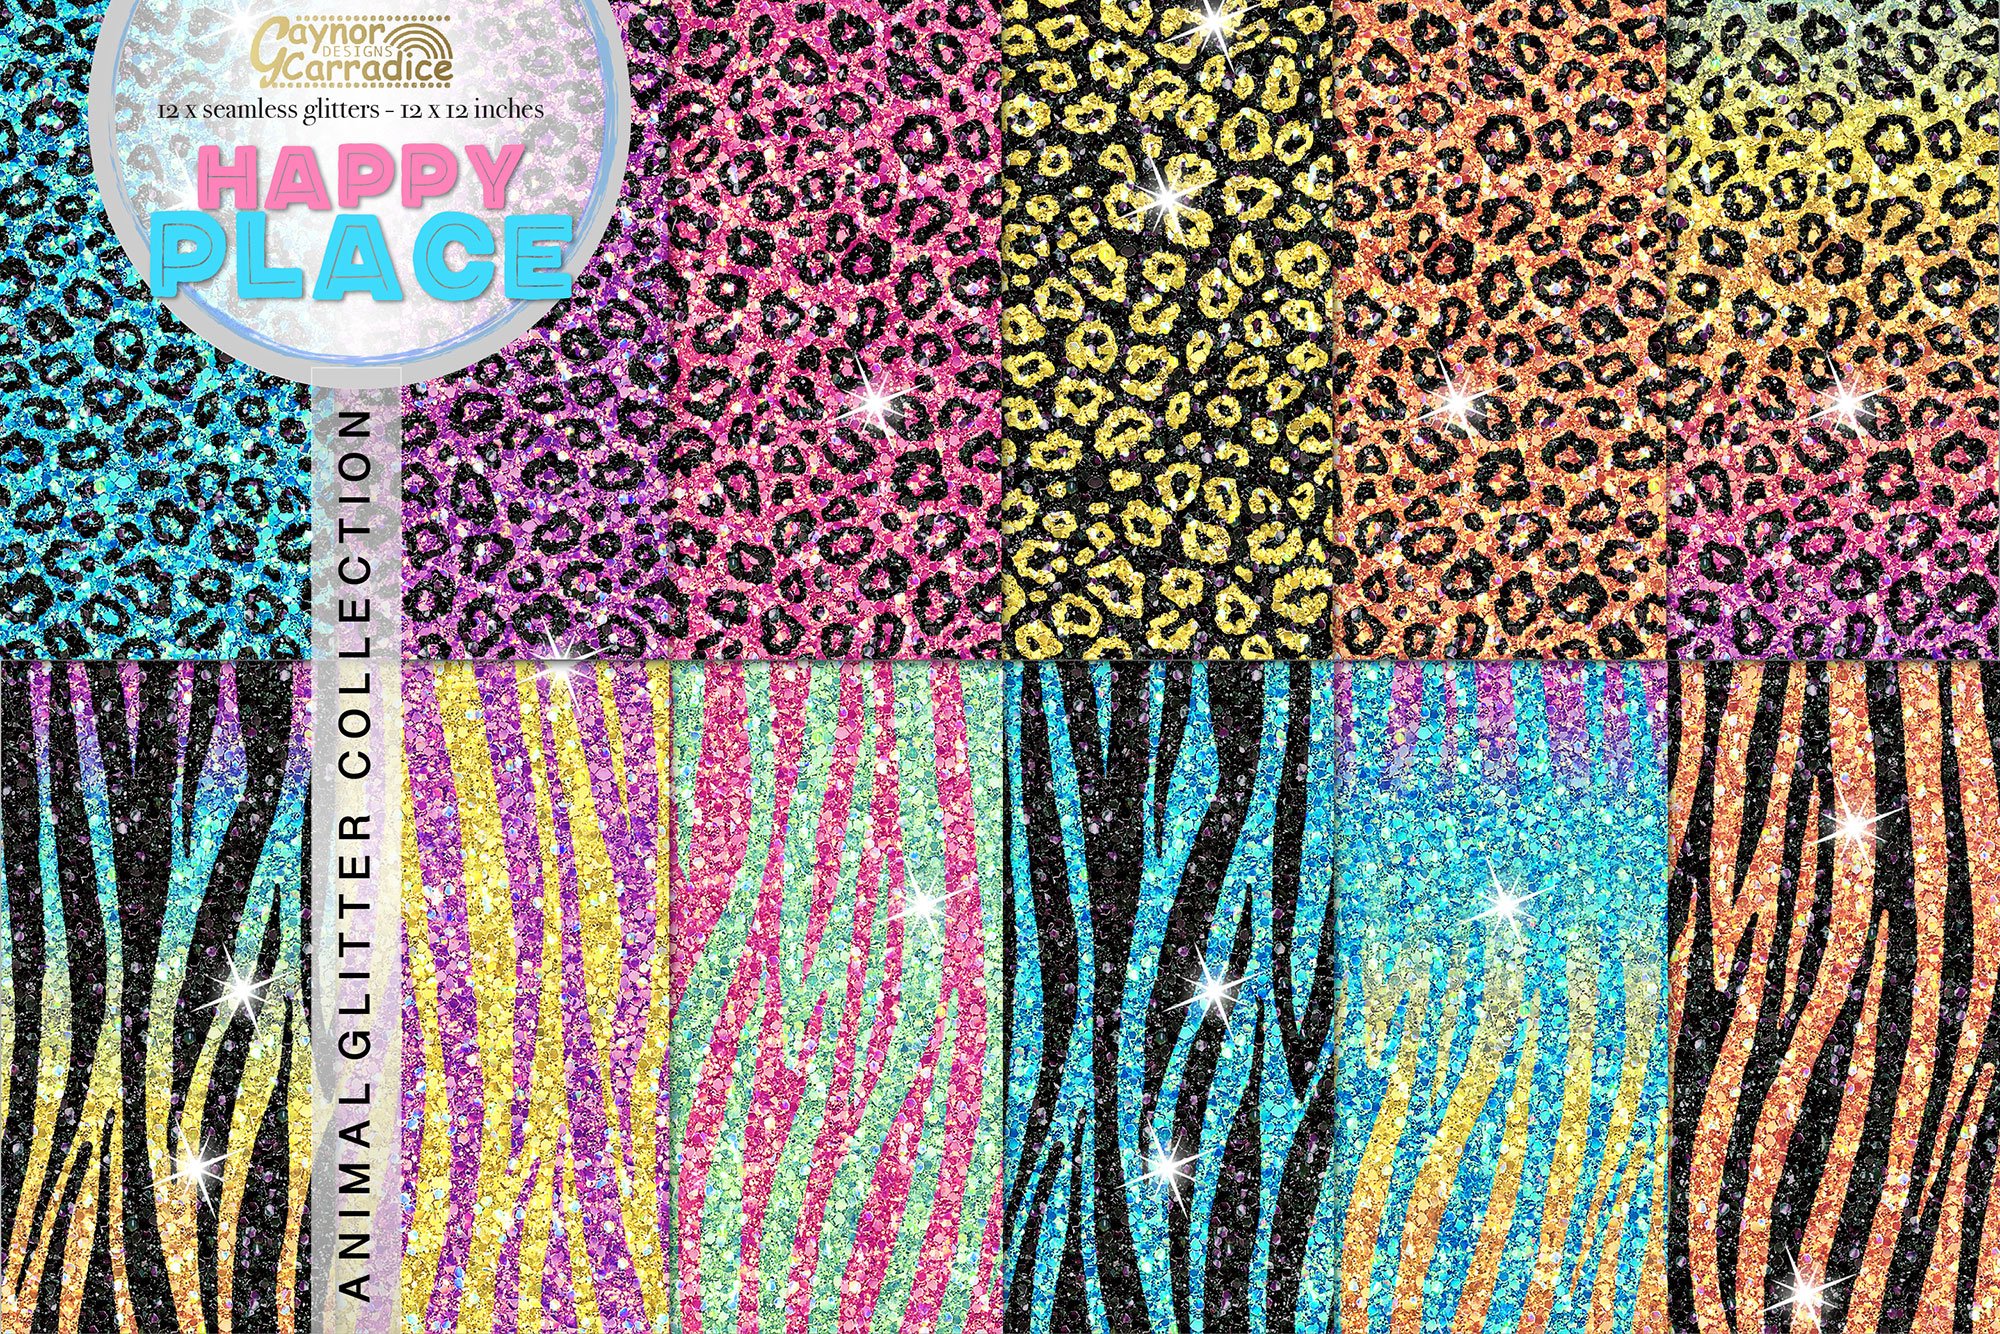 Rainbow animal print glitter cover image.